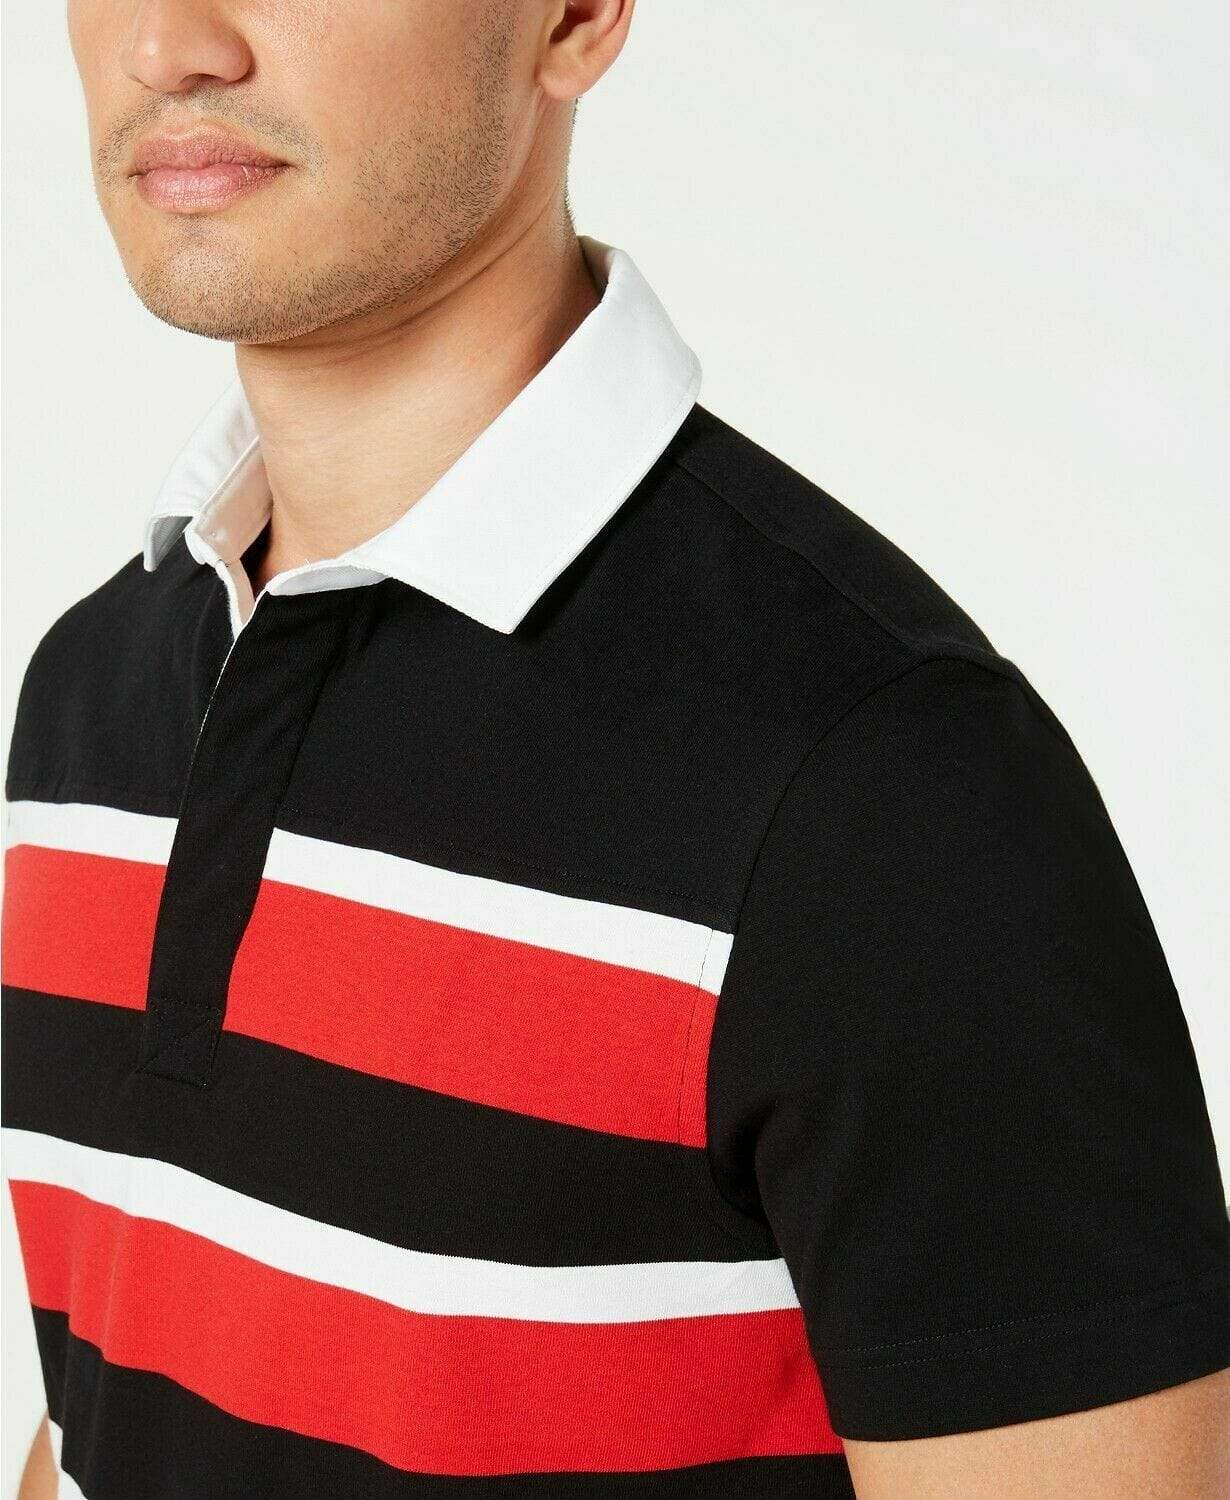 Club Room Mens Tops Large / Black / Red / White Striped Polo Shirt